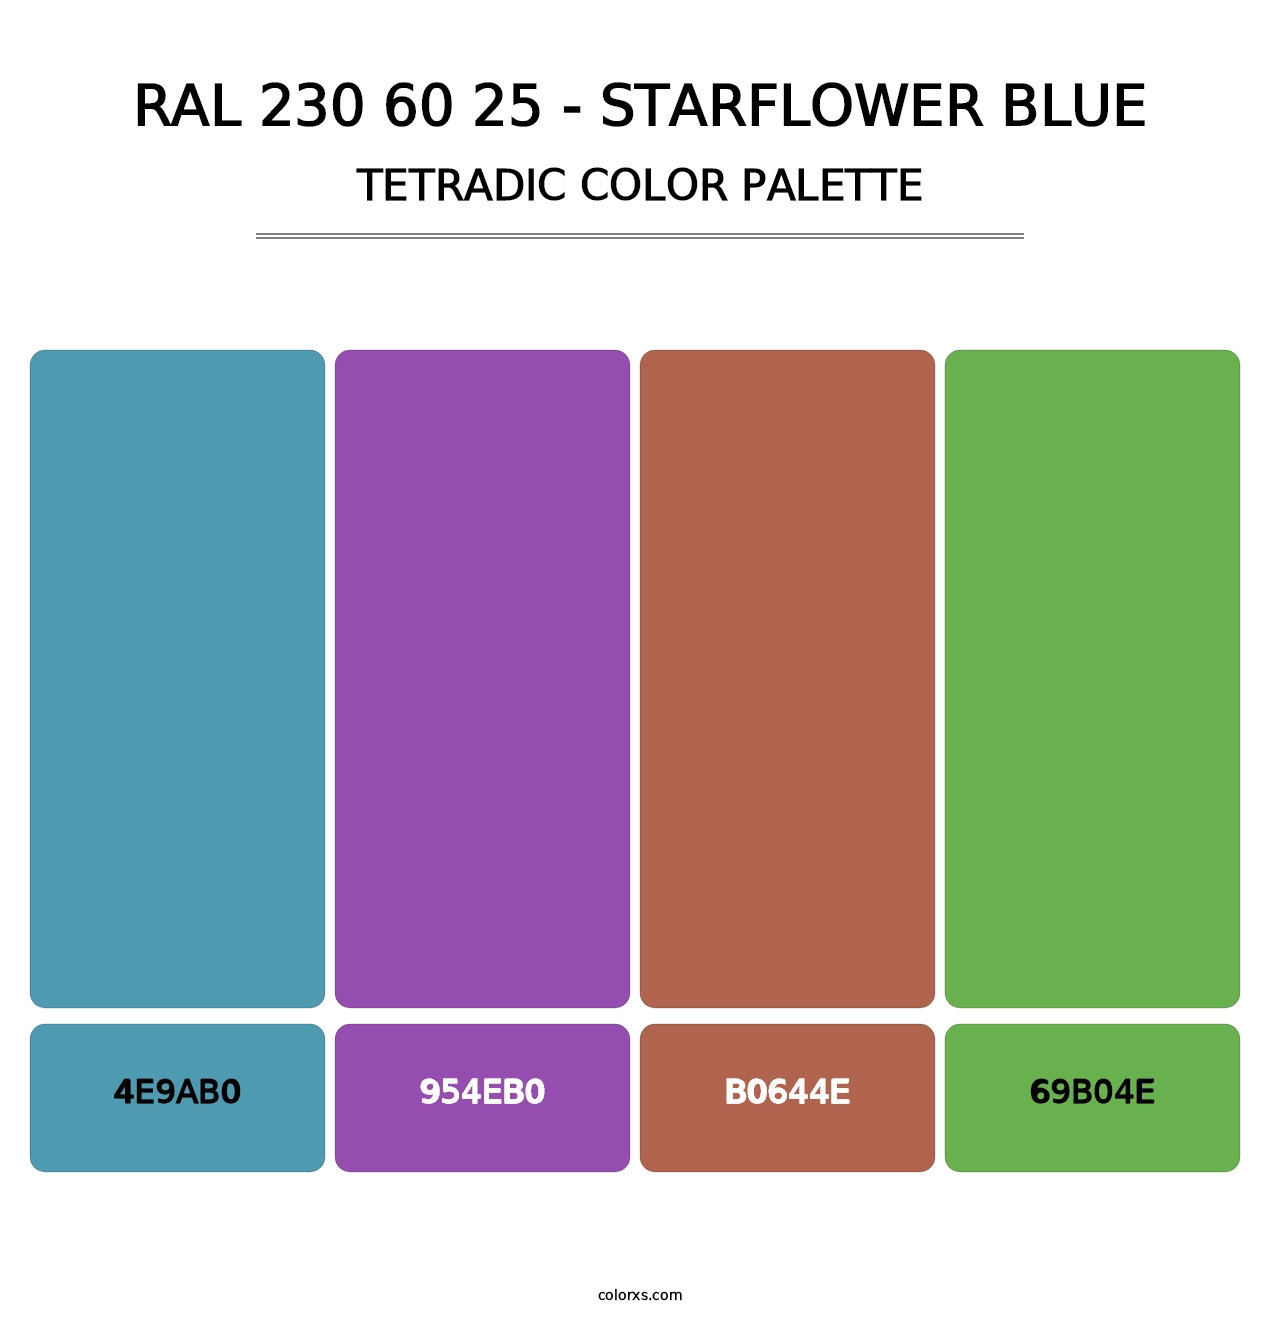 RAL 230 60 25 - Starflower Blue - Tetradic Color Palette